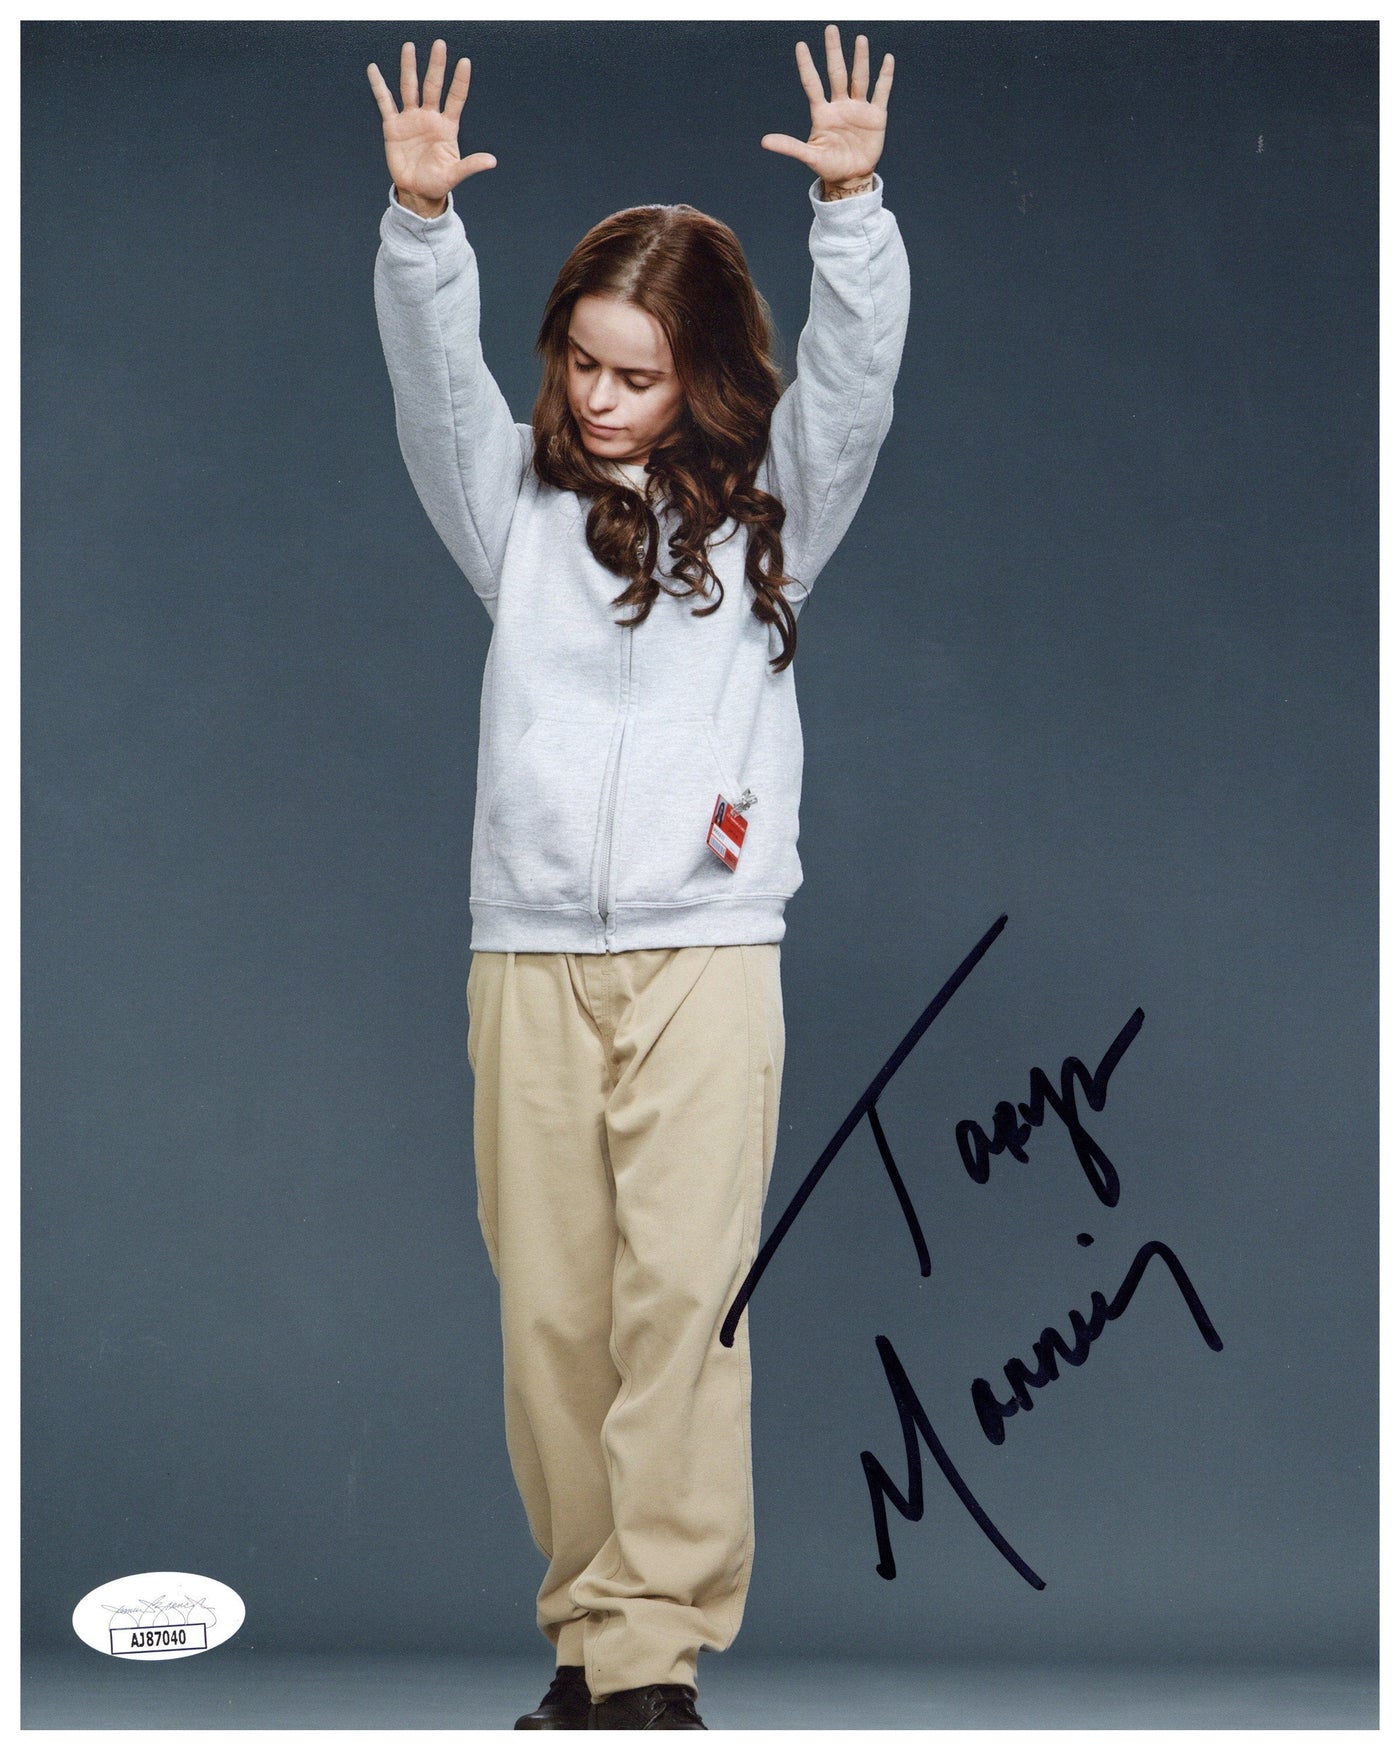 Taryn Manning Signed 8x10 Photo Orange is the New Black Autographed JSA COA